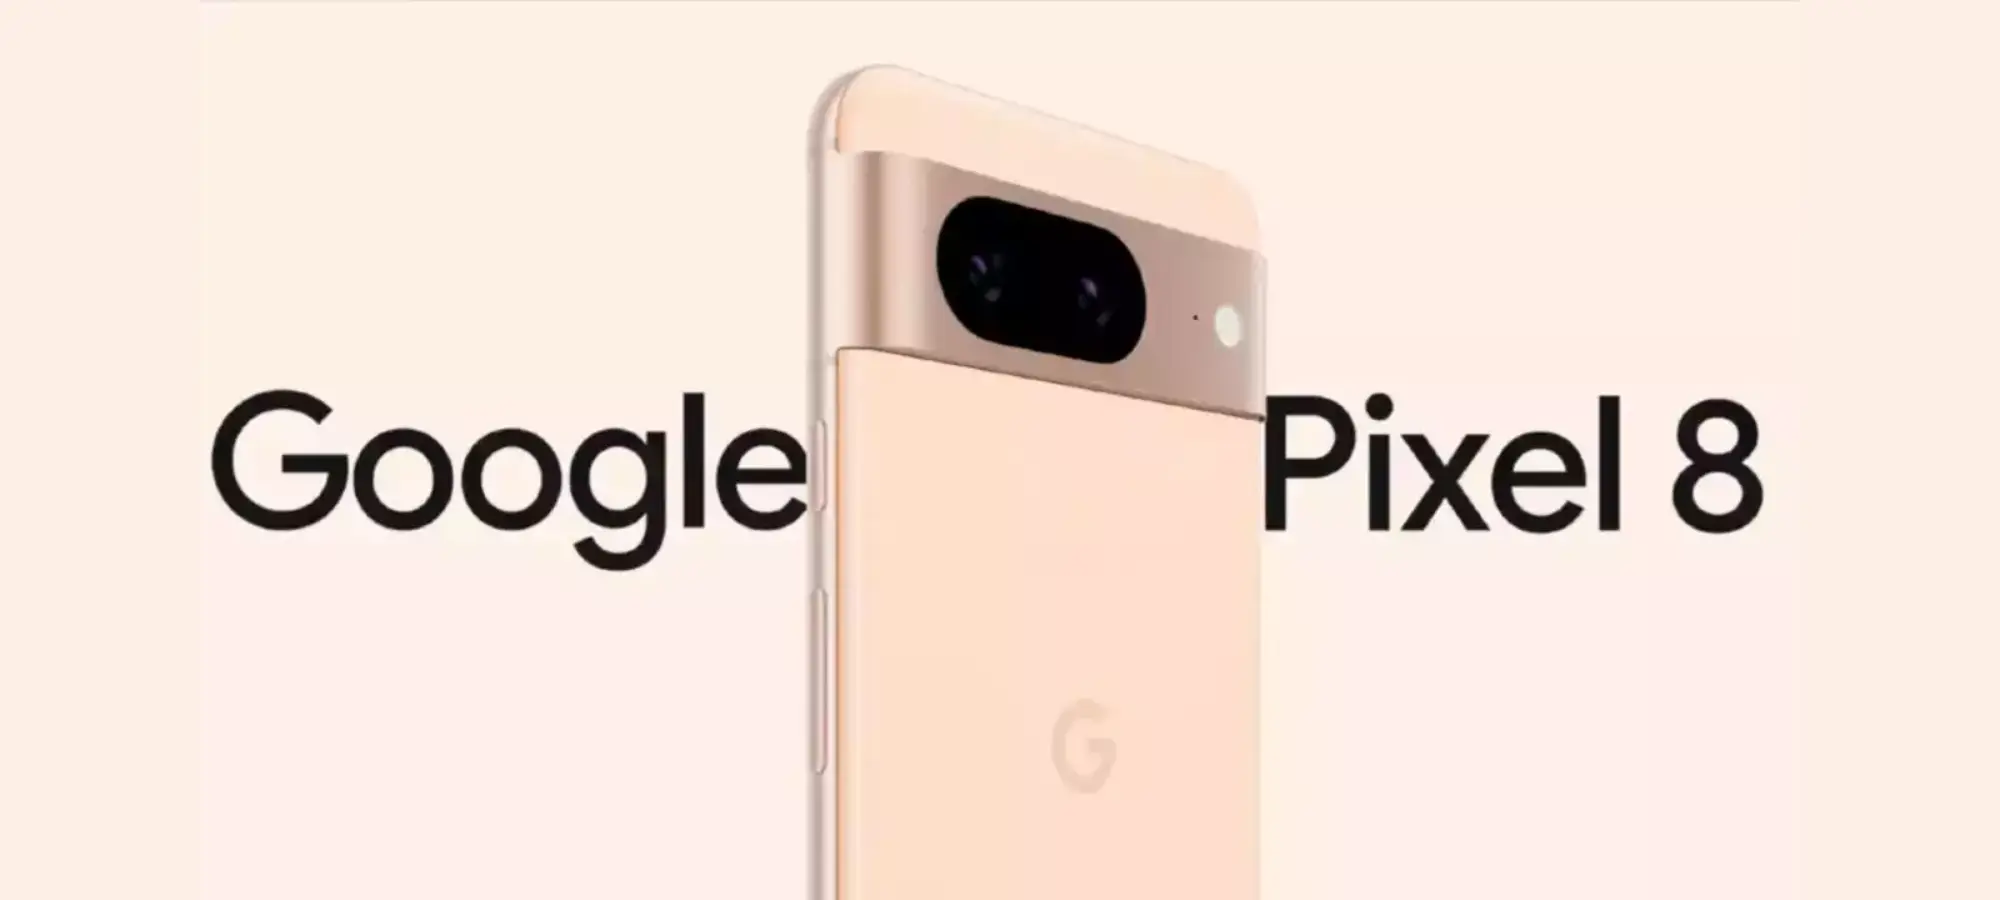 Google Pixel 8 Review